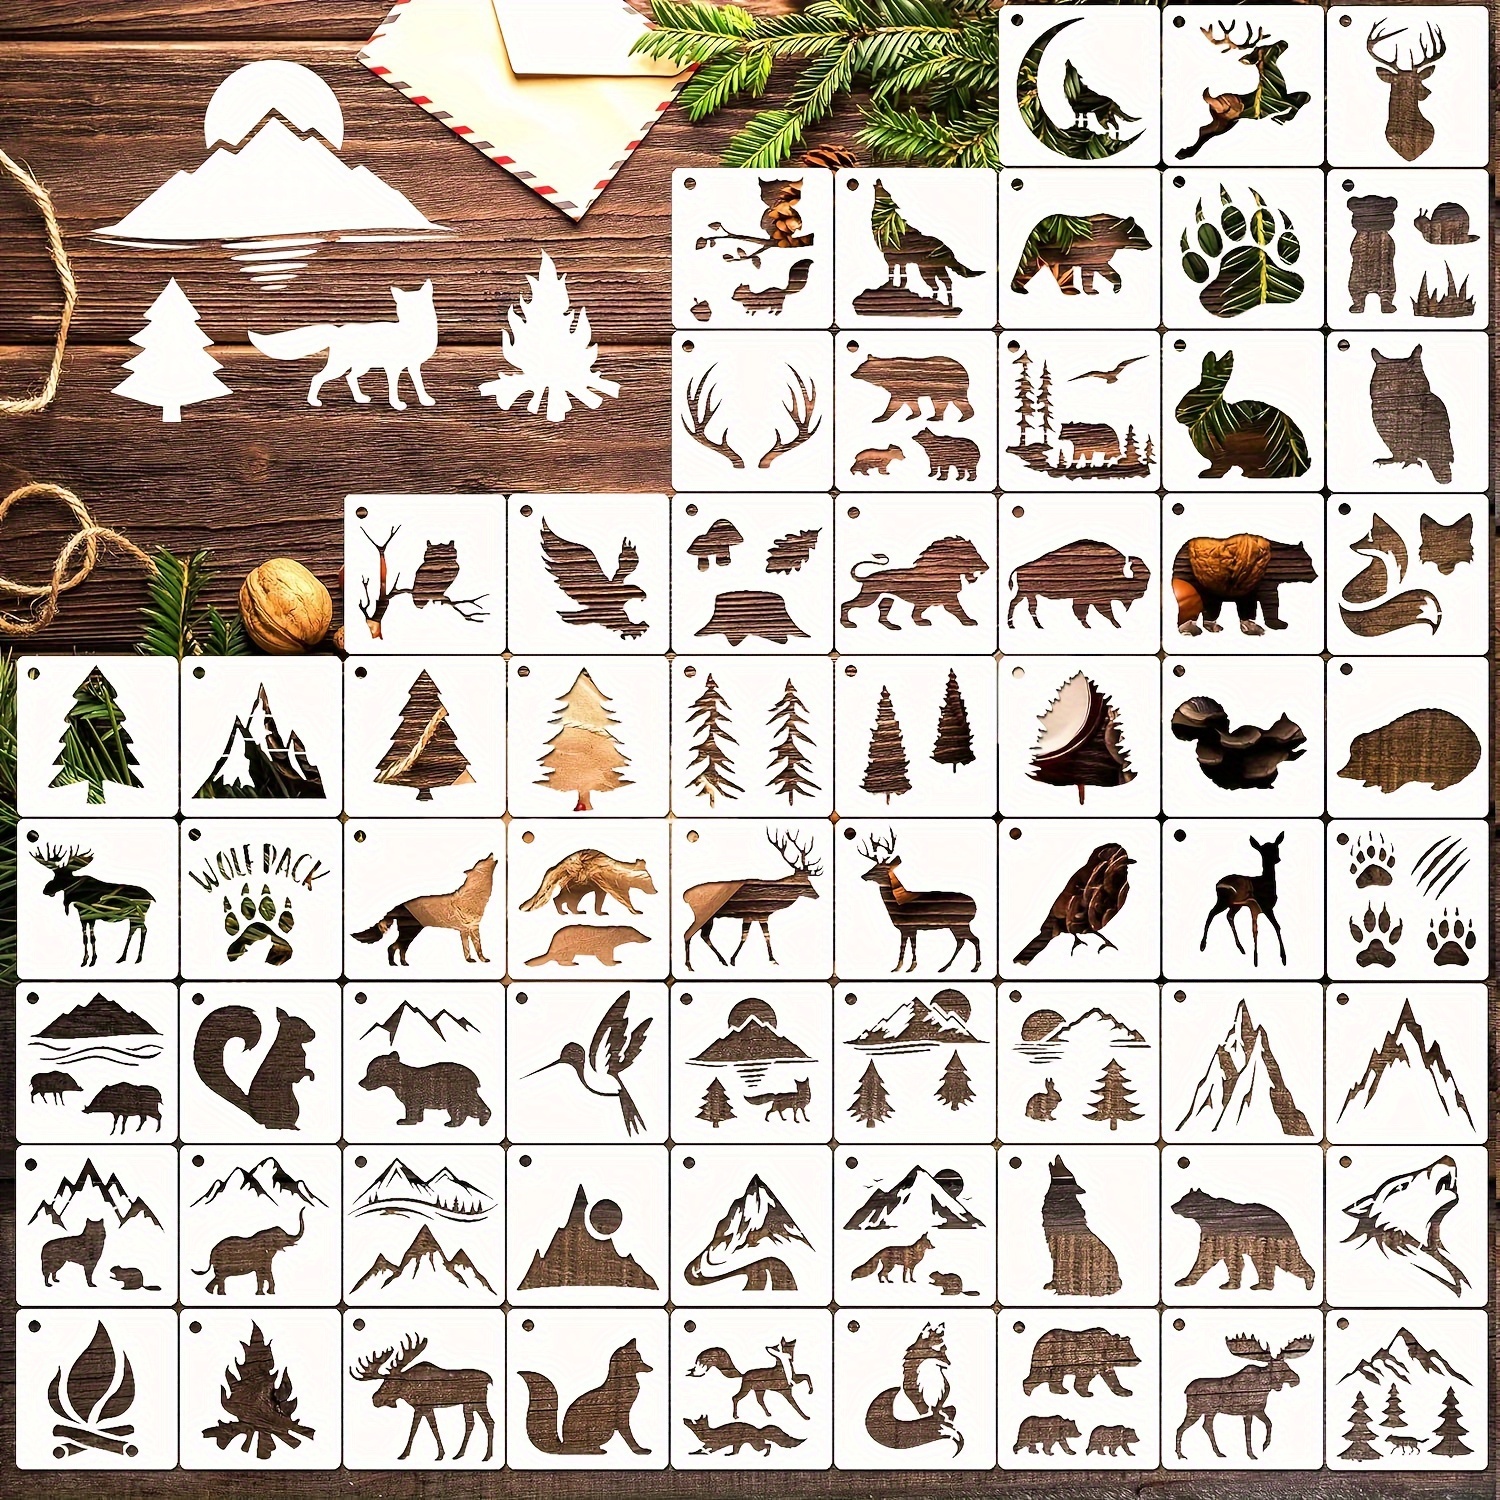 

65pcs Animal Stencils For Painting, Small Reusable Deer Bear Stencil Template Tree Hummingbird Mountain Diy Craft Paint Stencils For Painting On Wood Wall Card Rock Decor (wildlife)